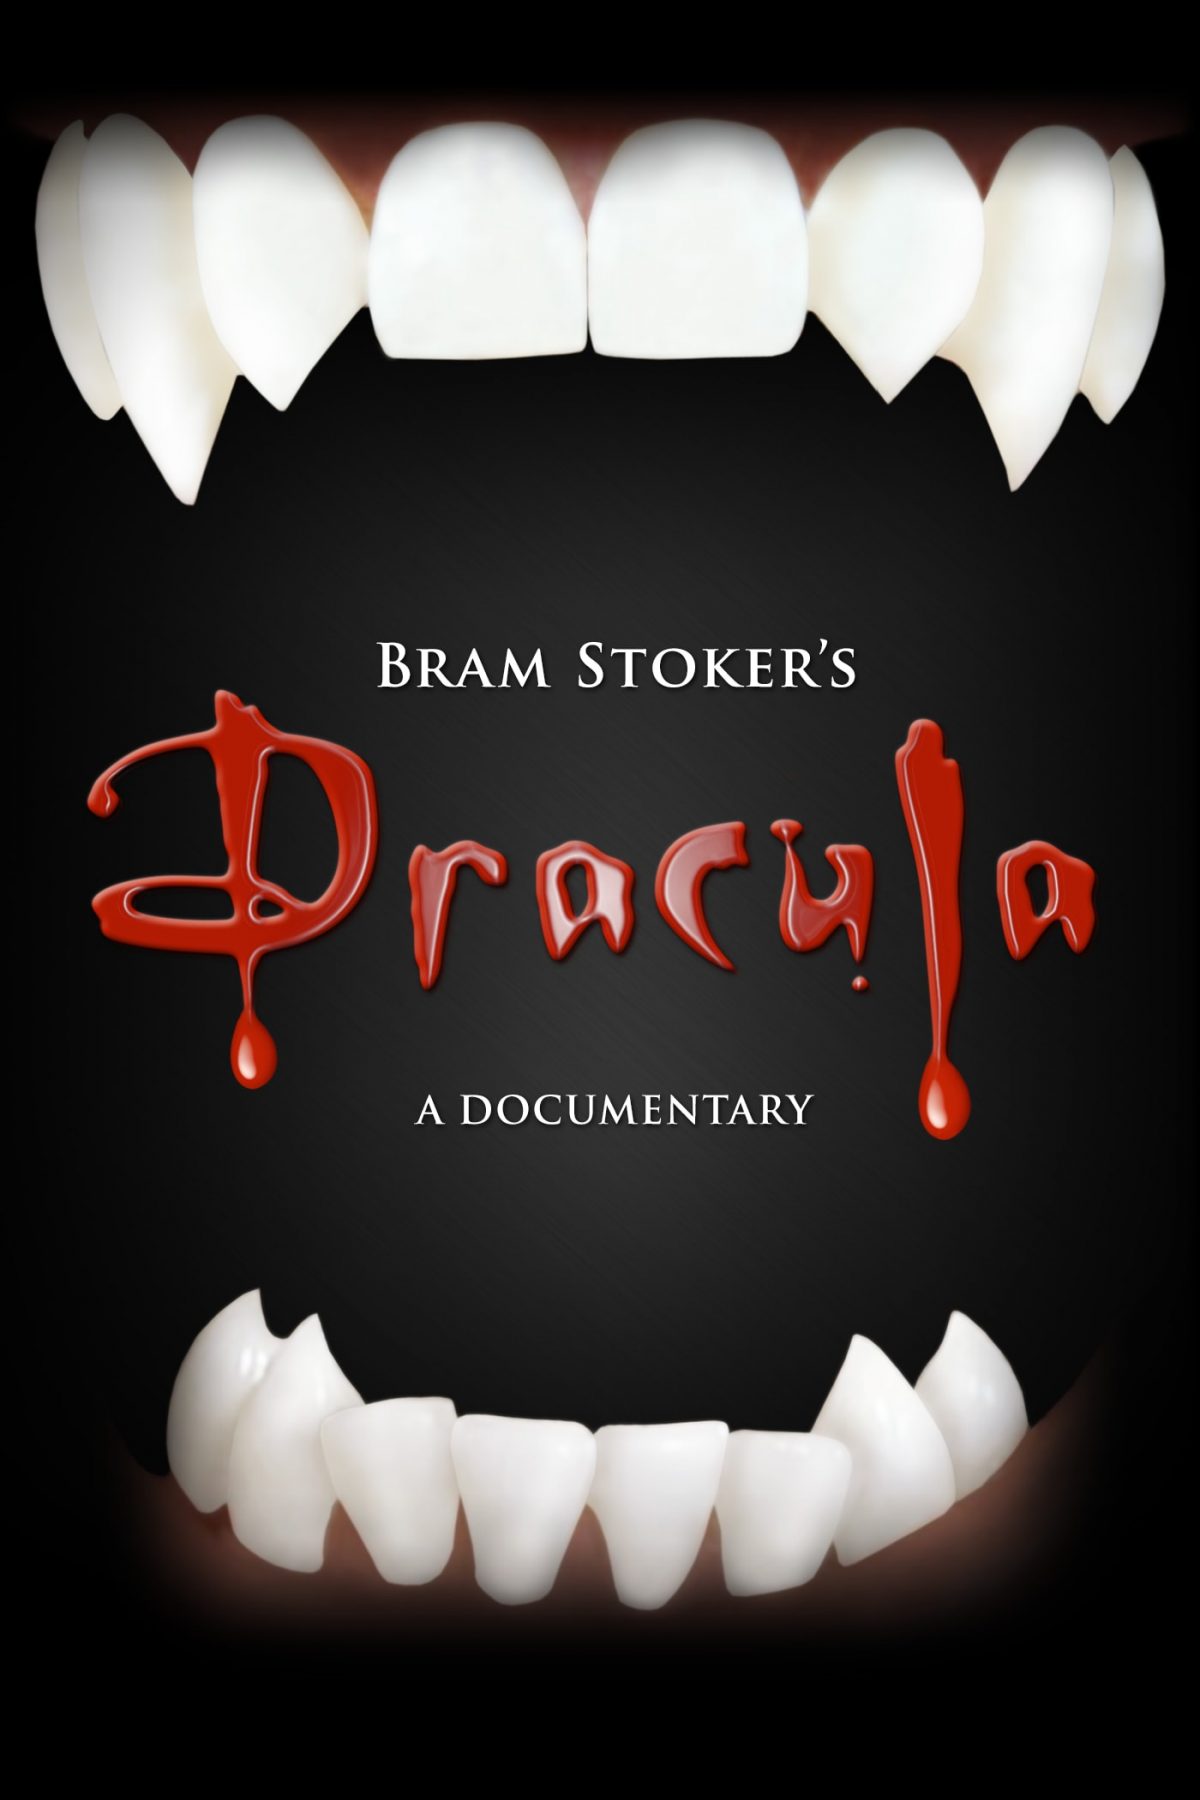     Bram Stoker's Dracula: A Documentary